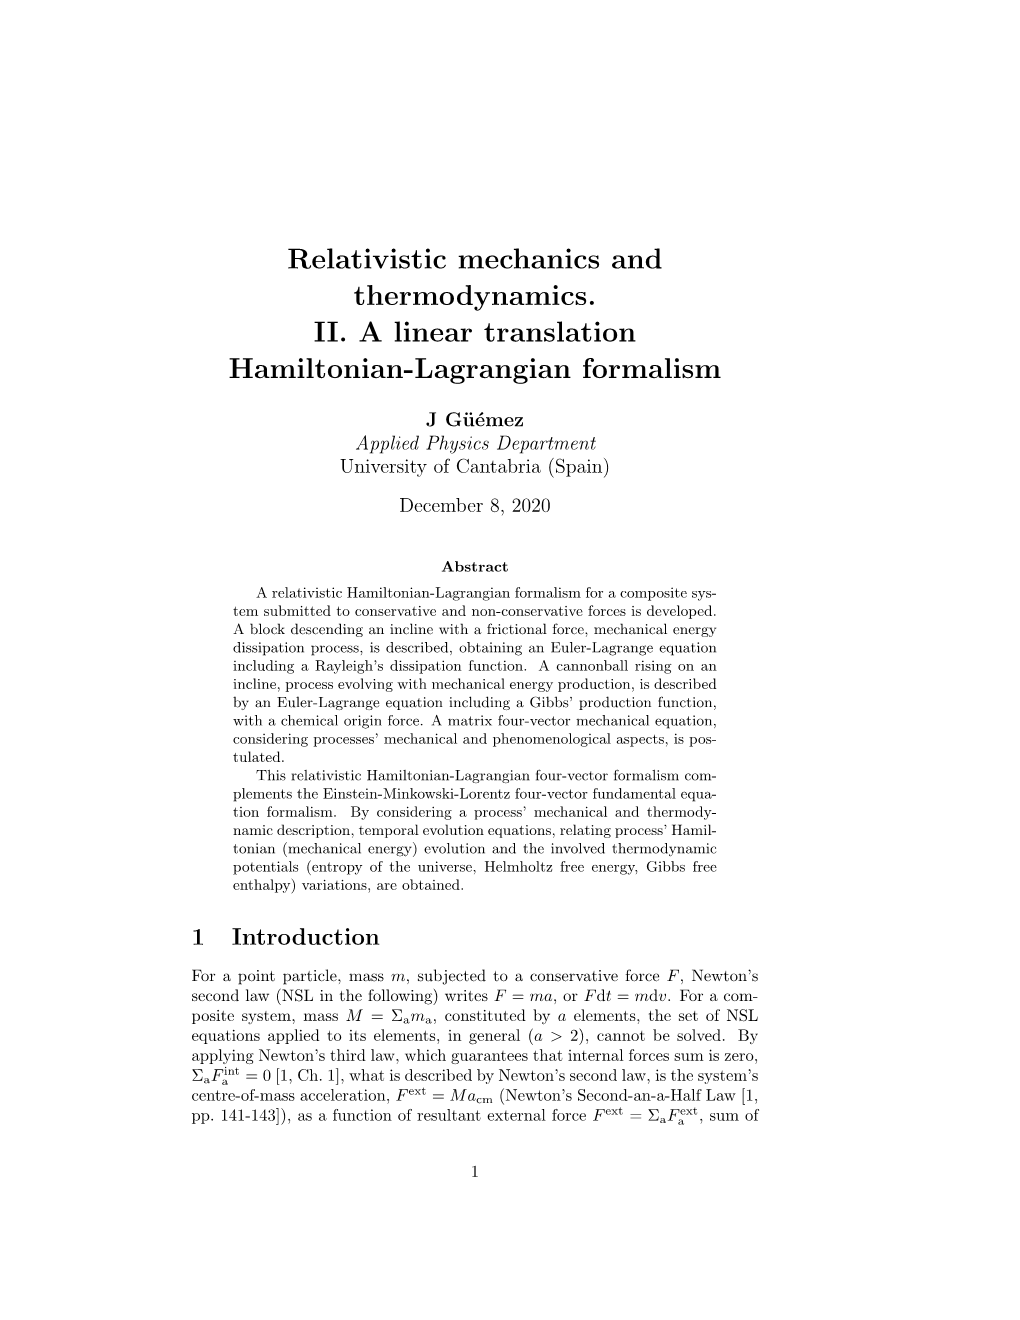 Relativistic Mechanics and Thermodynamics. II. a Linear Translation Hamiltonian-Lagrangian Formalism